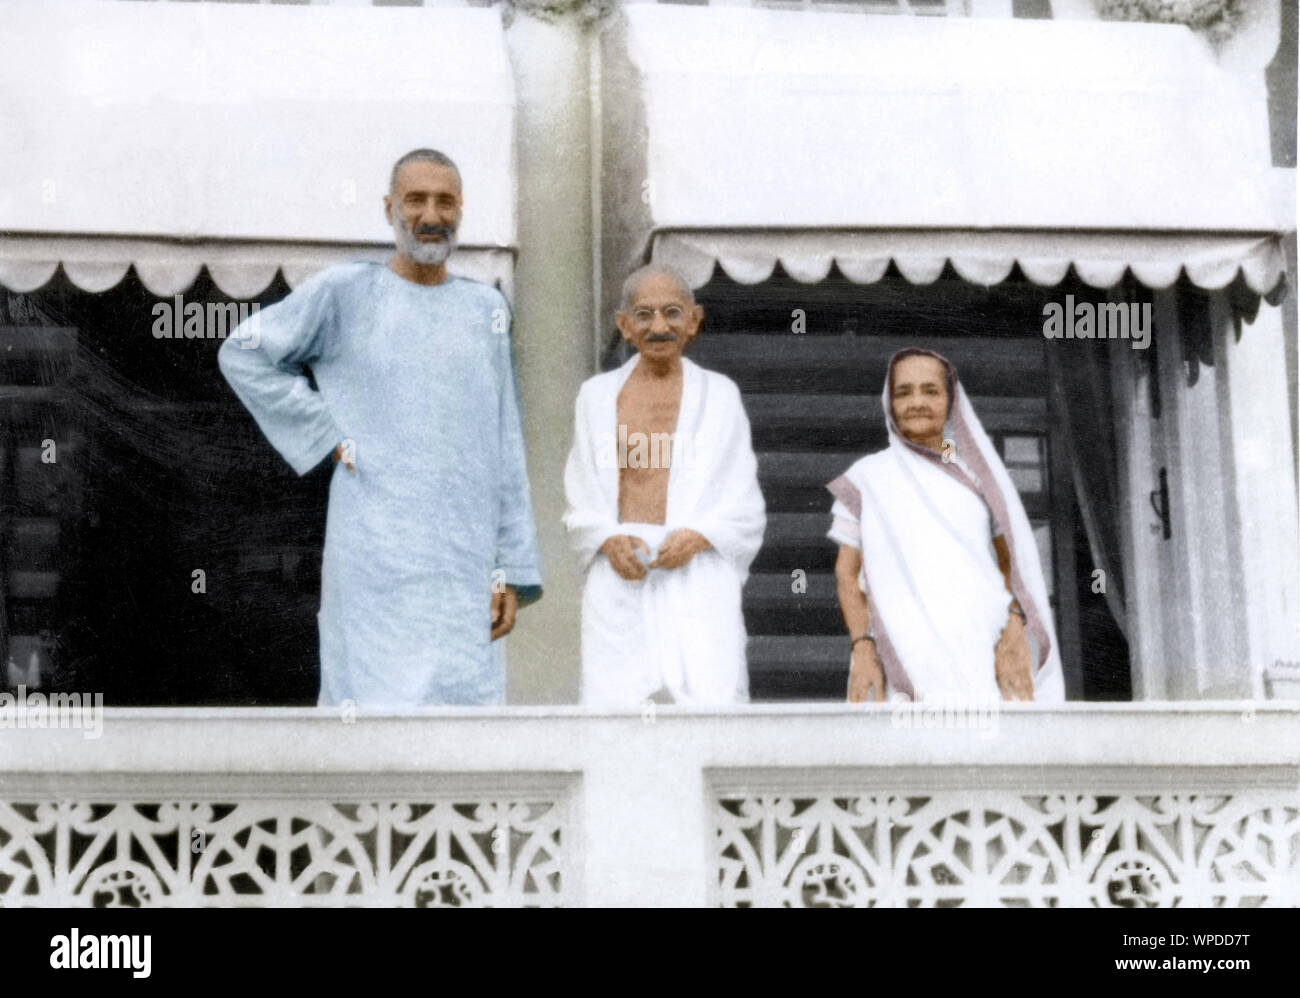 Abdul Ghaffar Khan, le Mahatma Gandhi et Kasturba comité permanent balcon, Mumbai, Inde, Asie, 1940 Banque D'Images